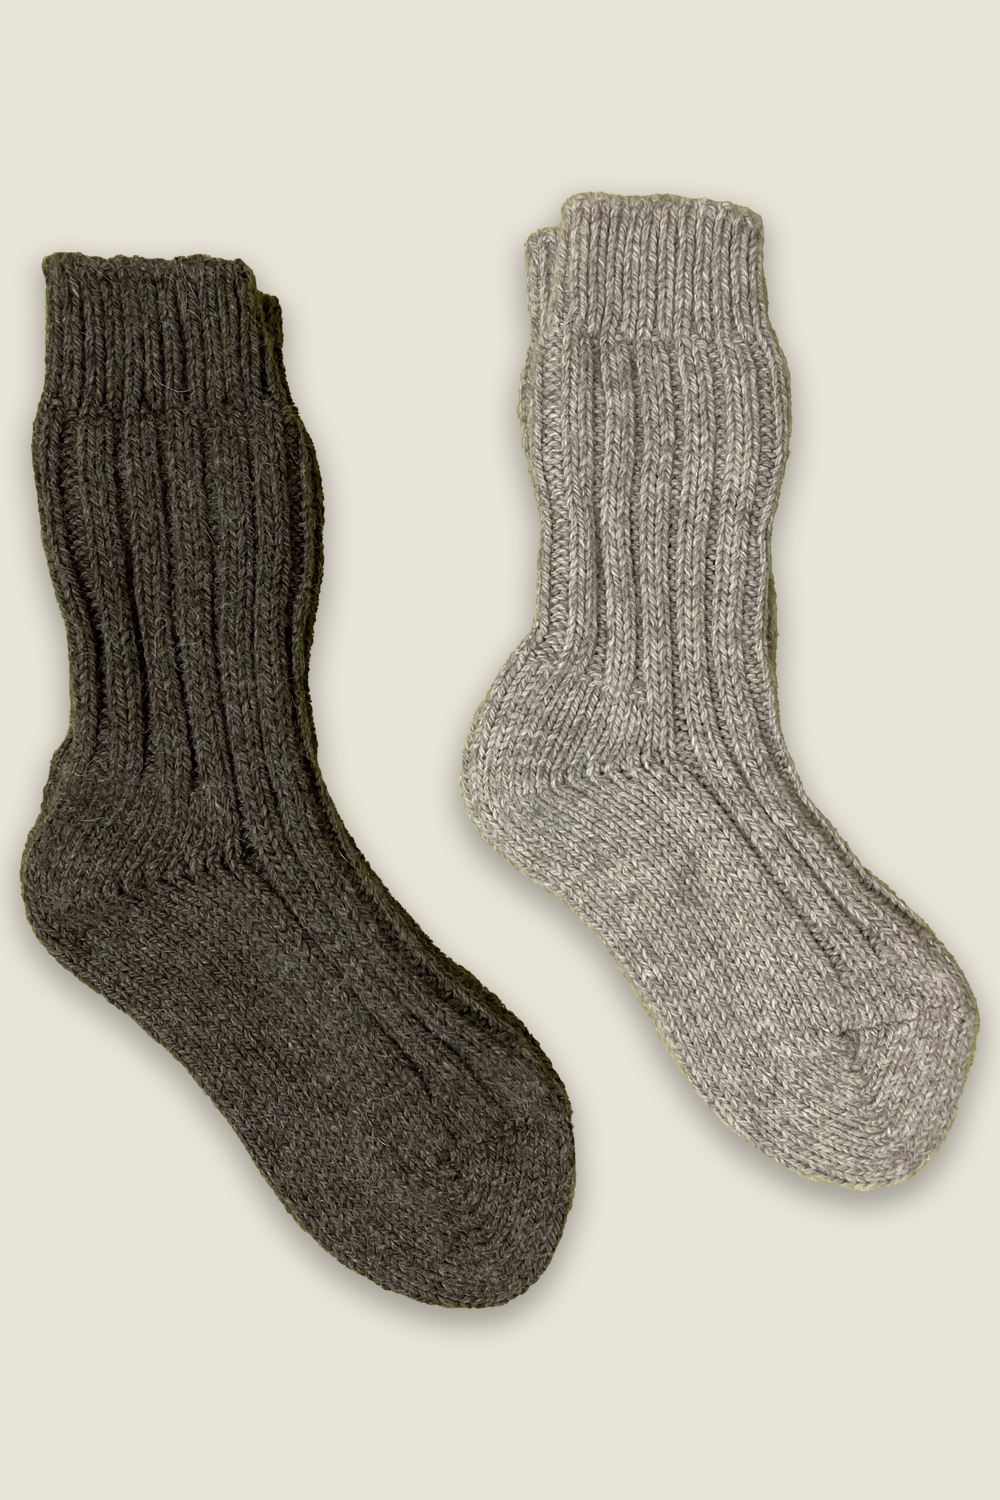 Alpaca Socks - grey and brown - 2 pairs